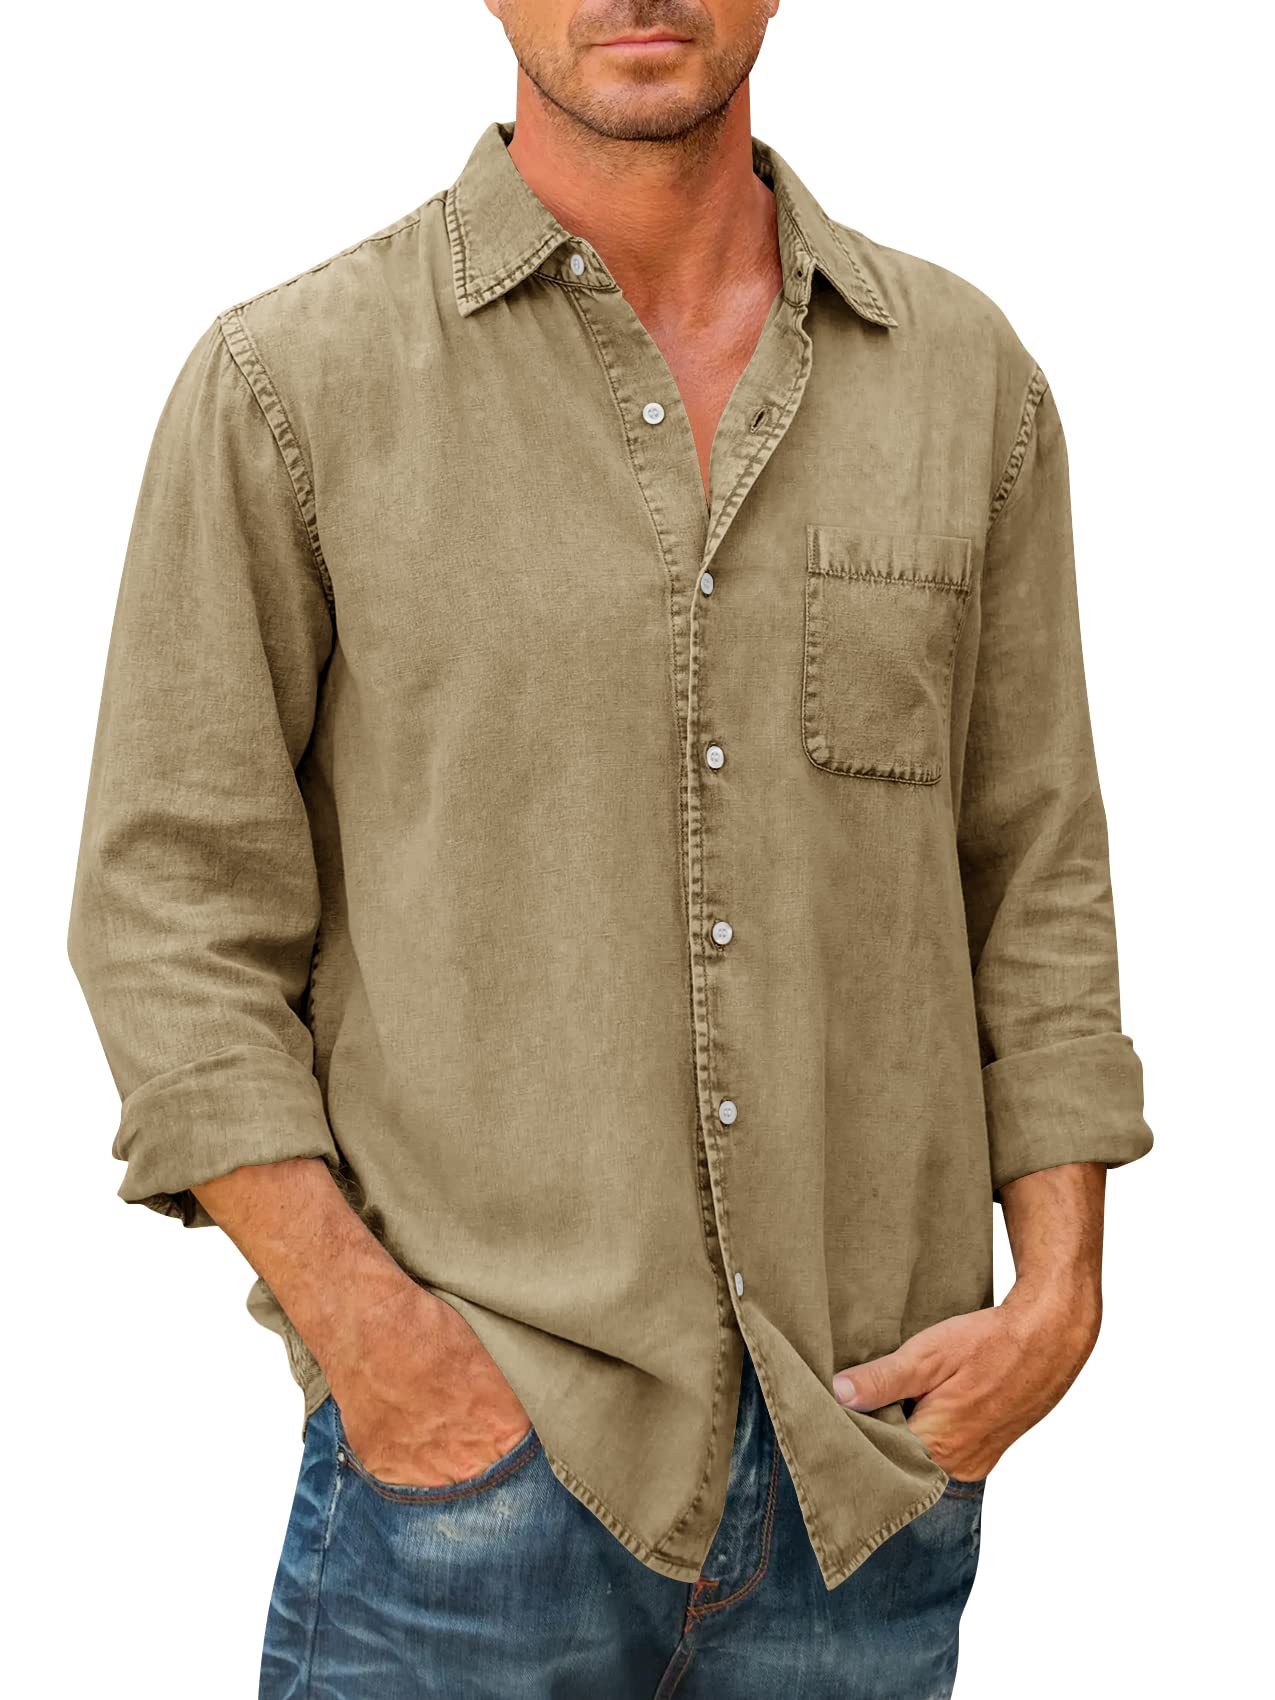 Men's High Quality Denim Shirts Long Sleeve-BUY 1 GET 1 FREE-5